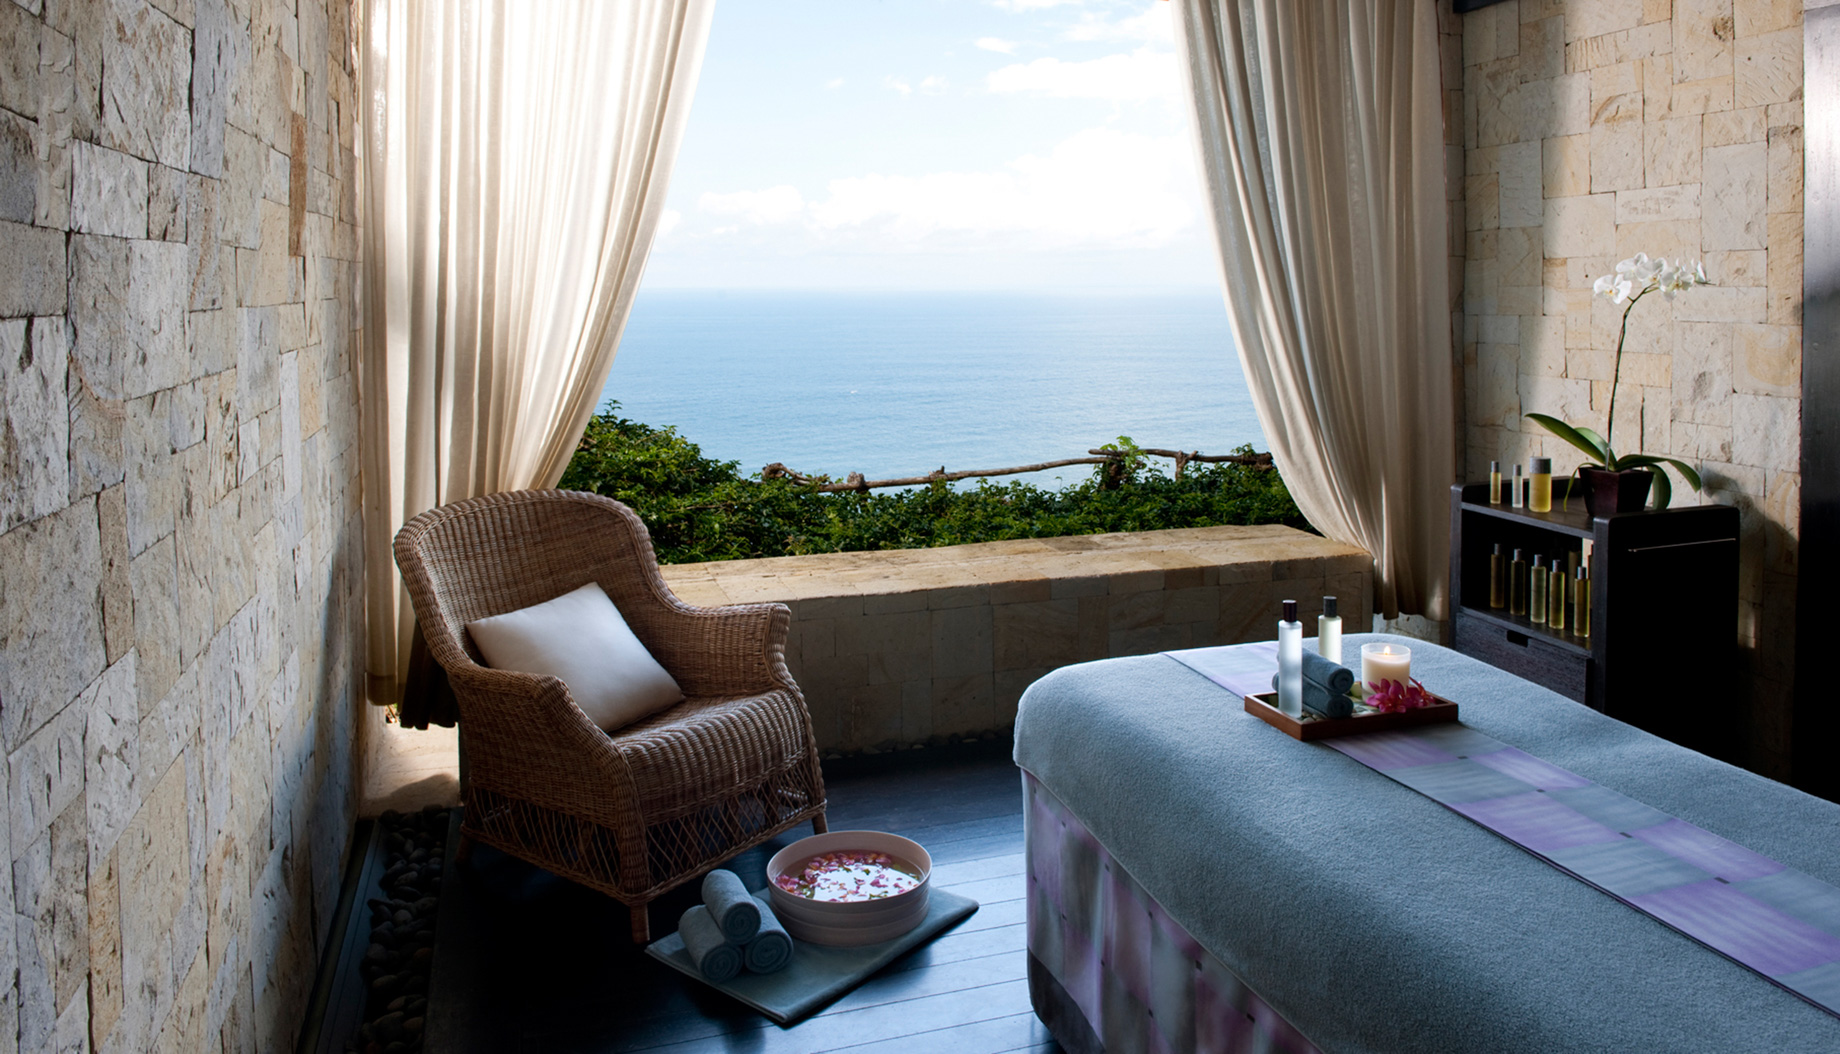 Bvlgari Resort Bali – Uluwatu, Bali, Indonesia – The Bvlgari Spa Treatment Room